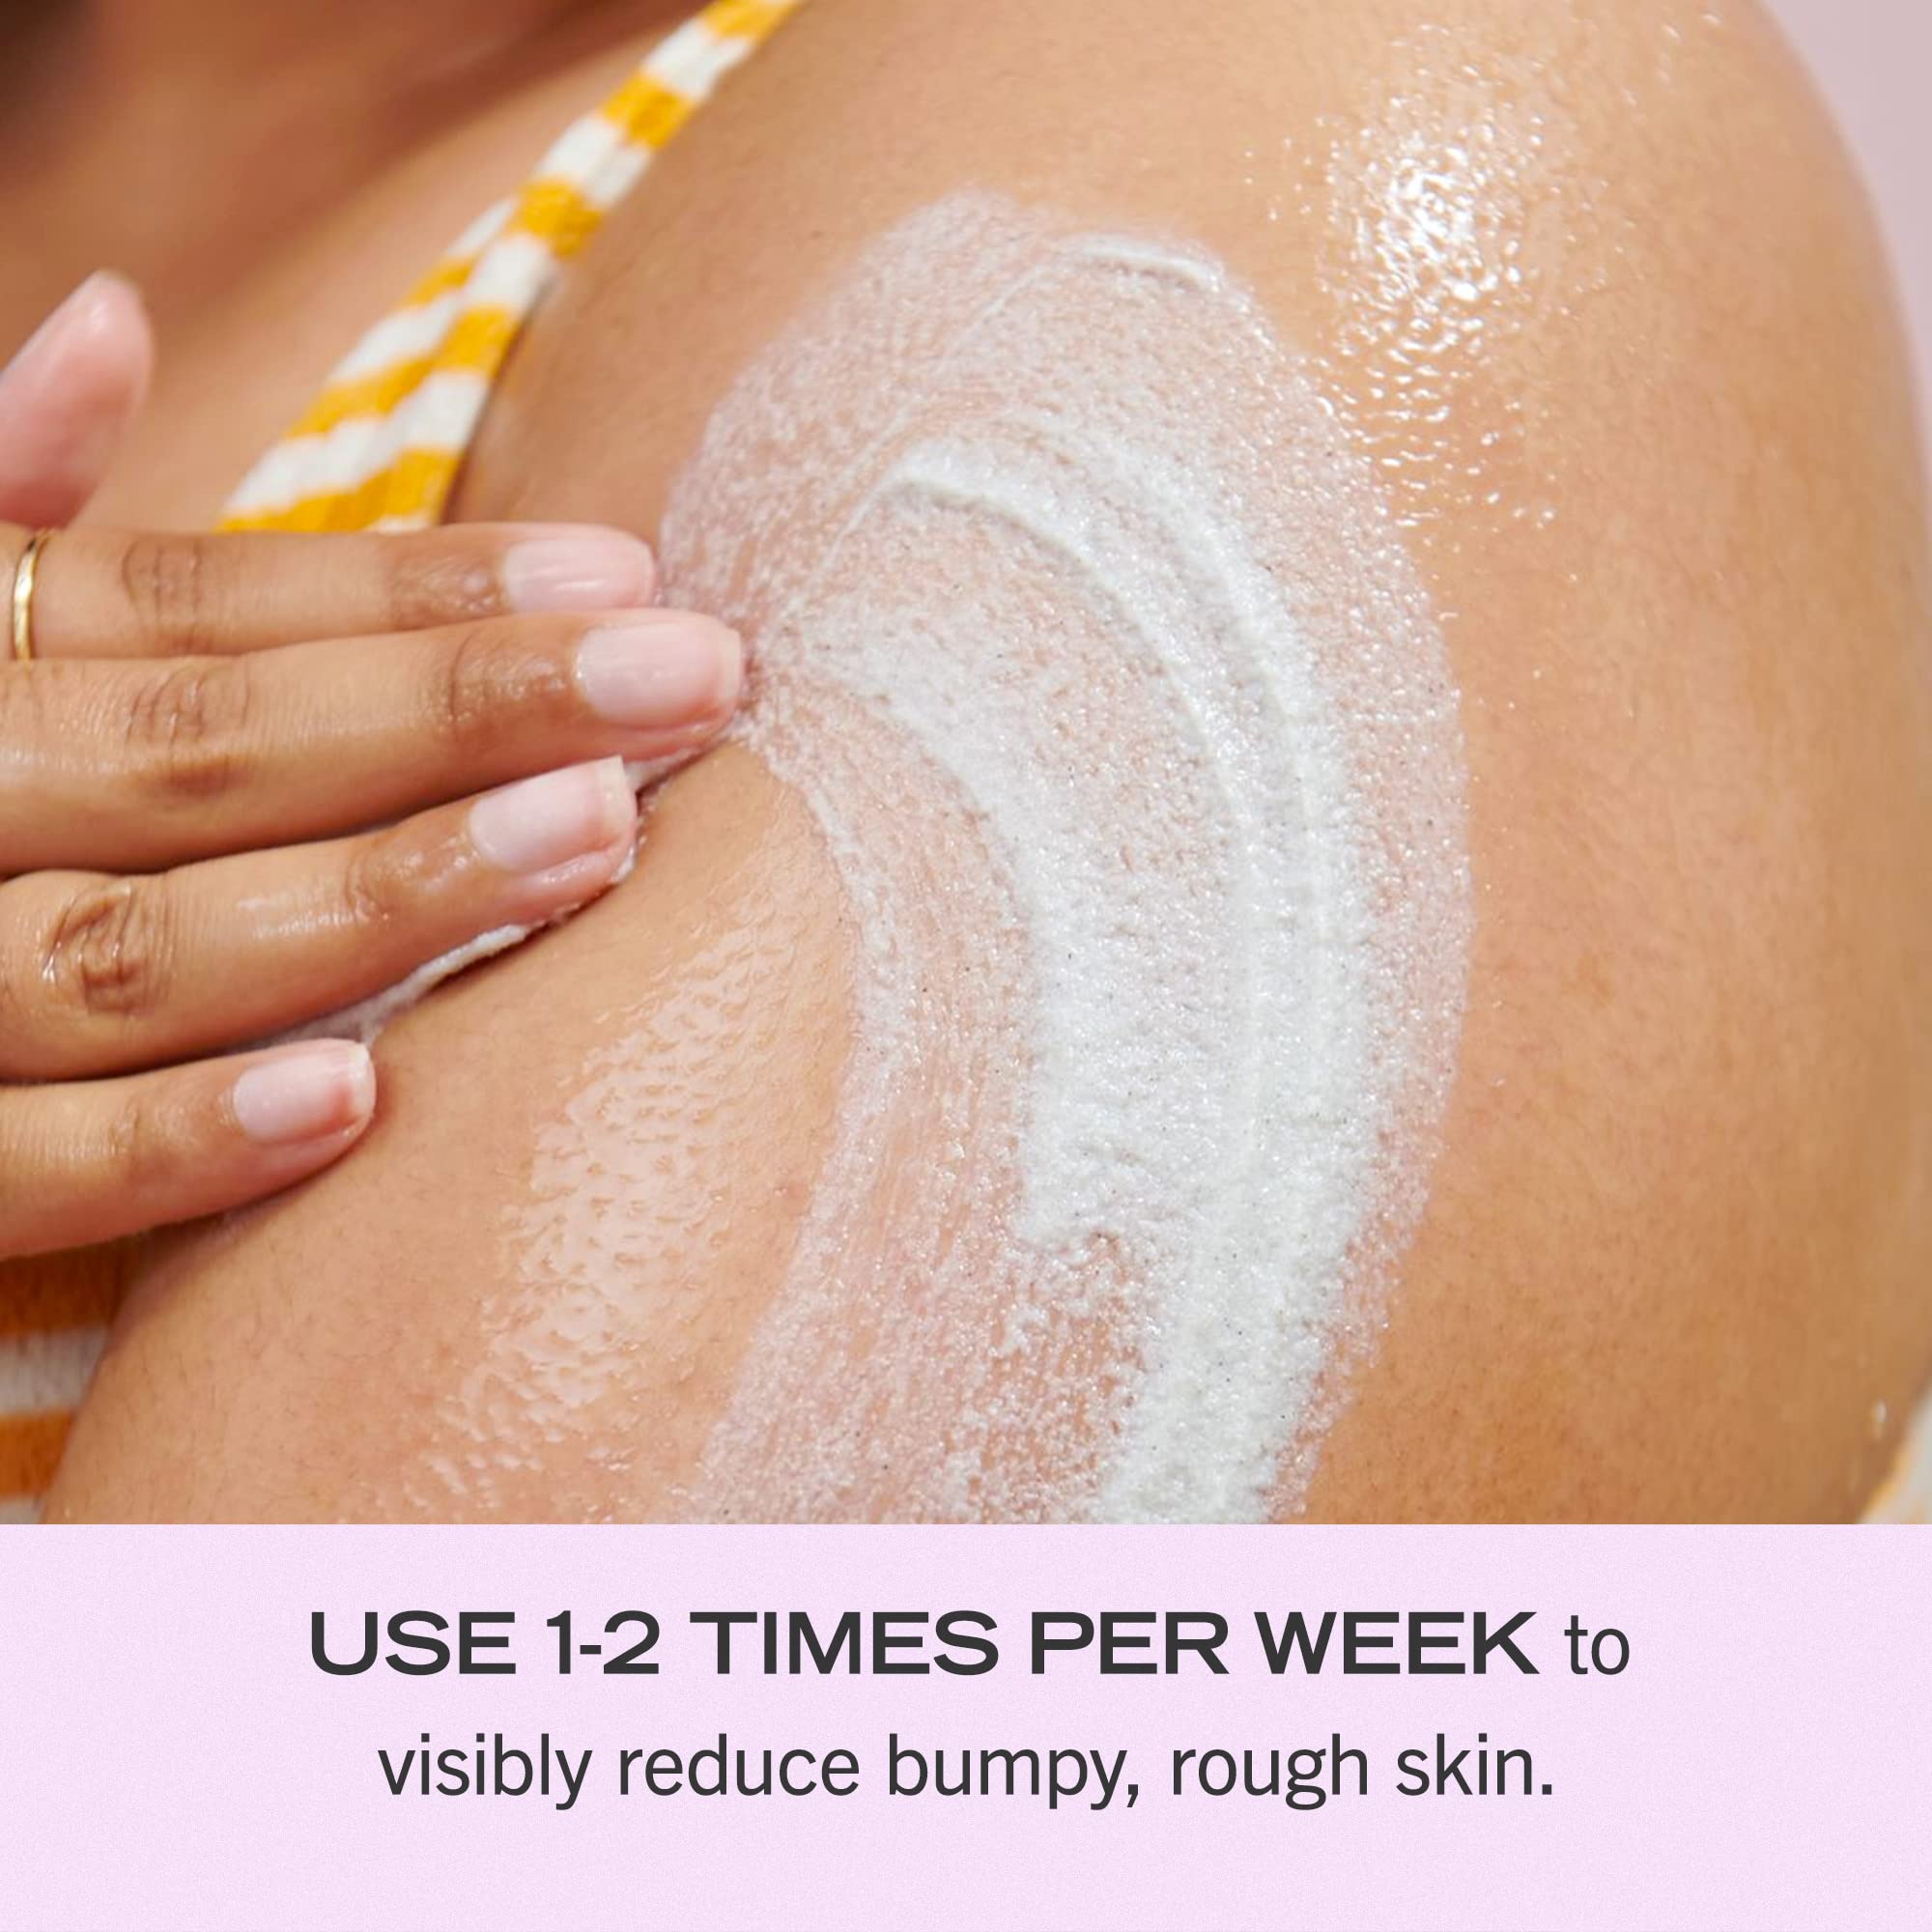 First Aid Beauty KP Bump Eraser Body Scrub Exfoliant for Keratosis Pilaris with 10% AHA – 8 oz